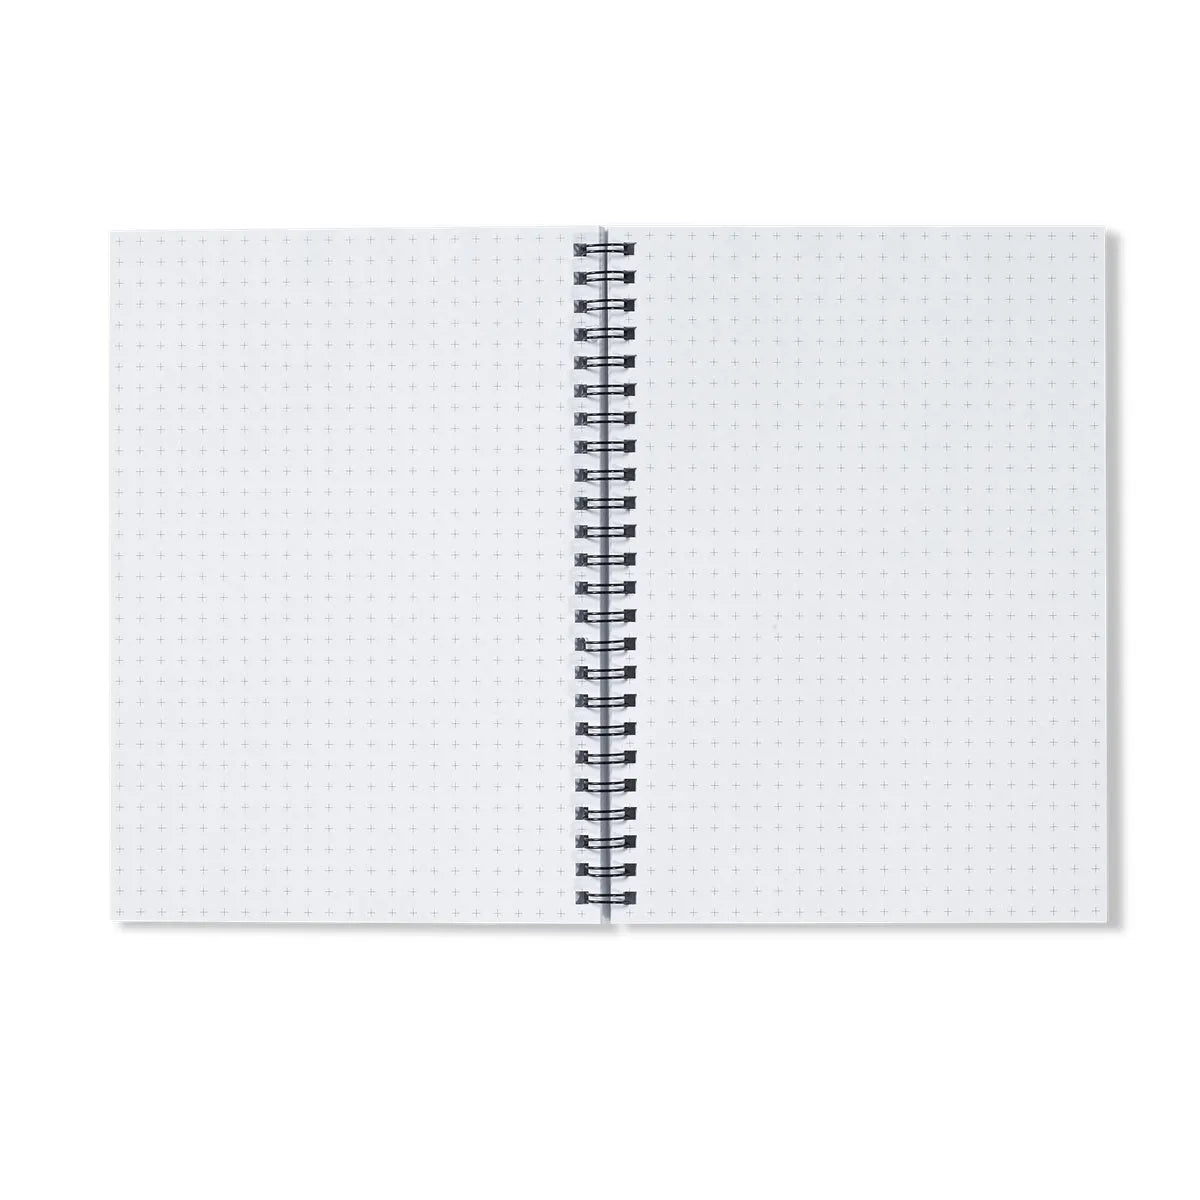 Pyramidal Saxifrage (aizoon) By Karl Blossfeldt Notebook - Notebooks & Notepads - Aesthetic Art